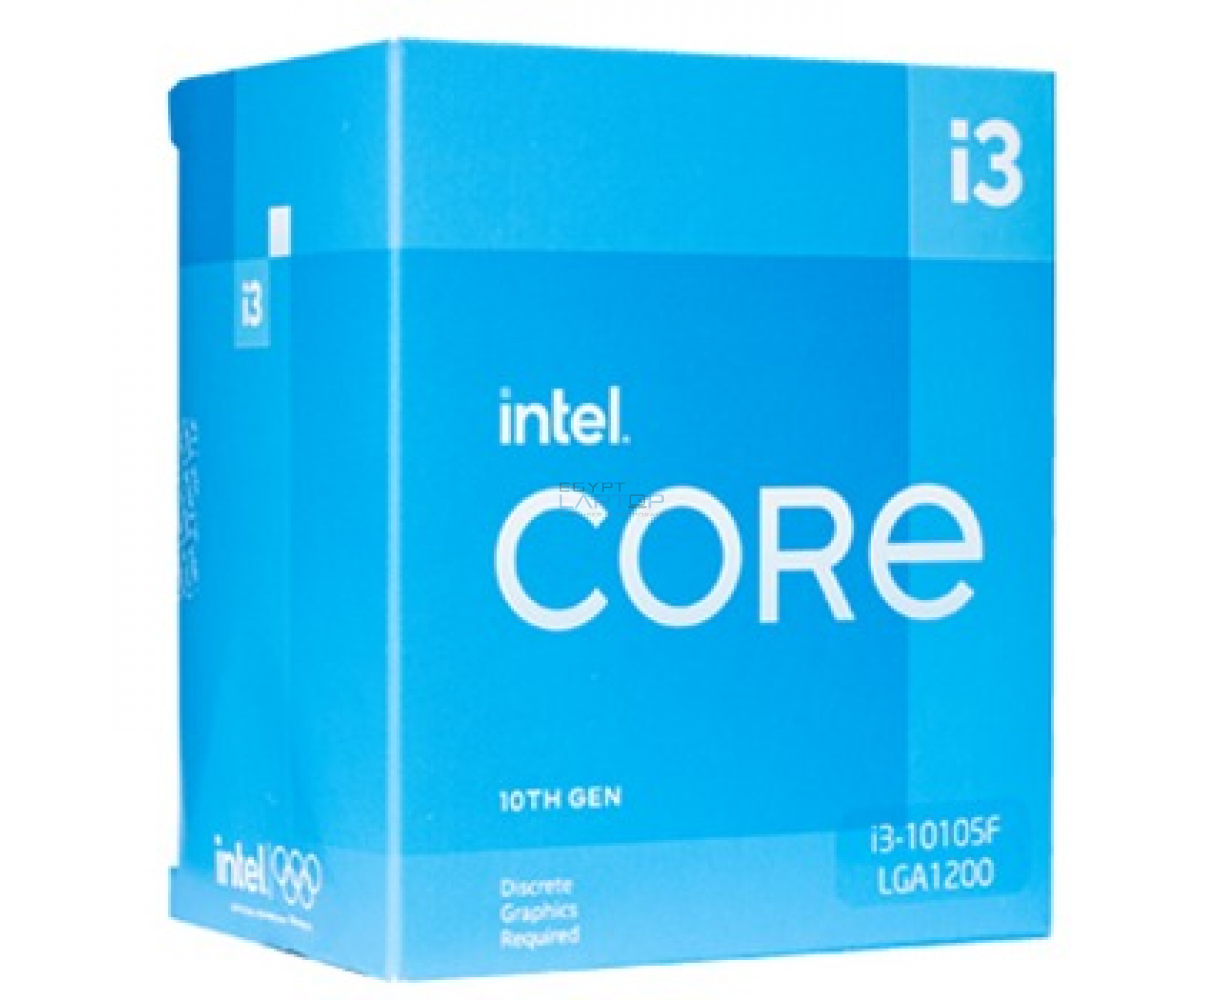 Intel Core i3-10105F DESKTOP PROCESSOR - Msi H510M-A Pro Motherboard ...